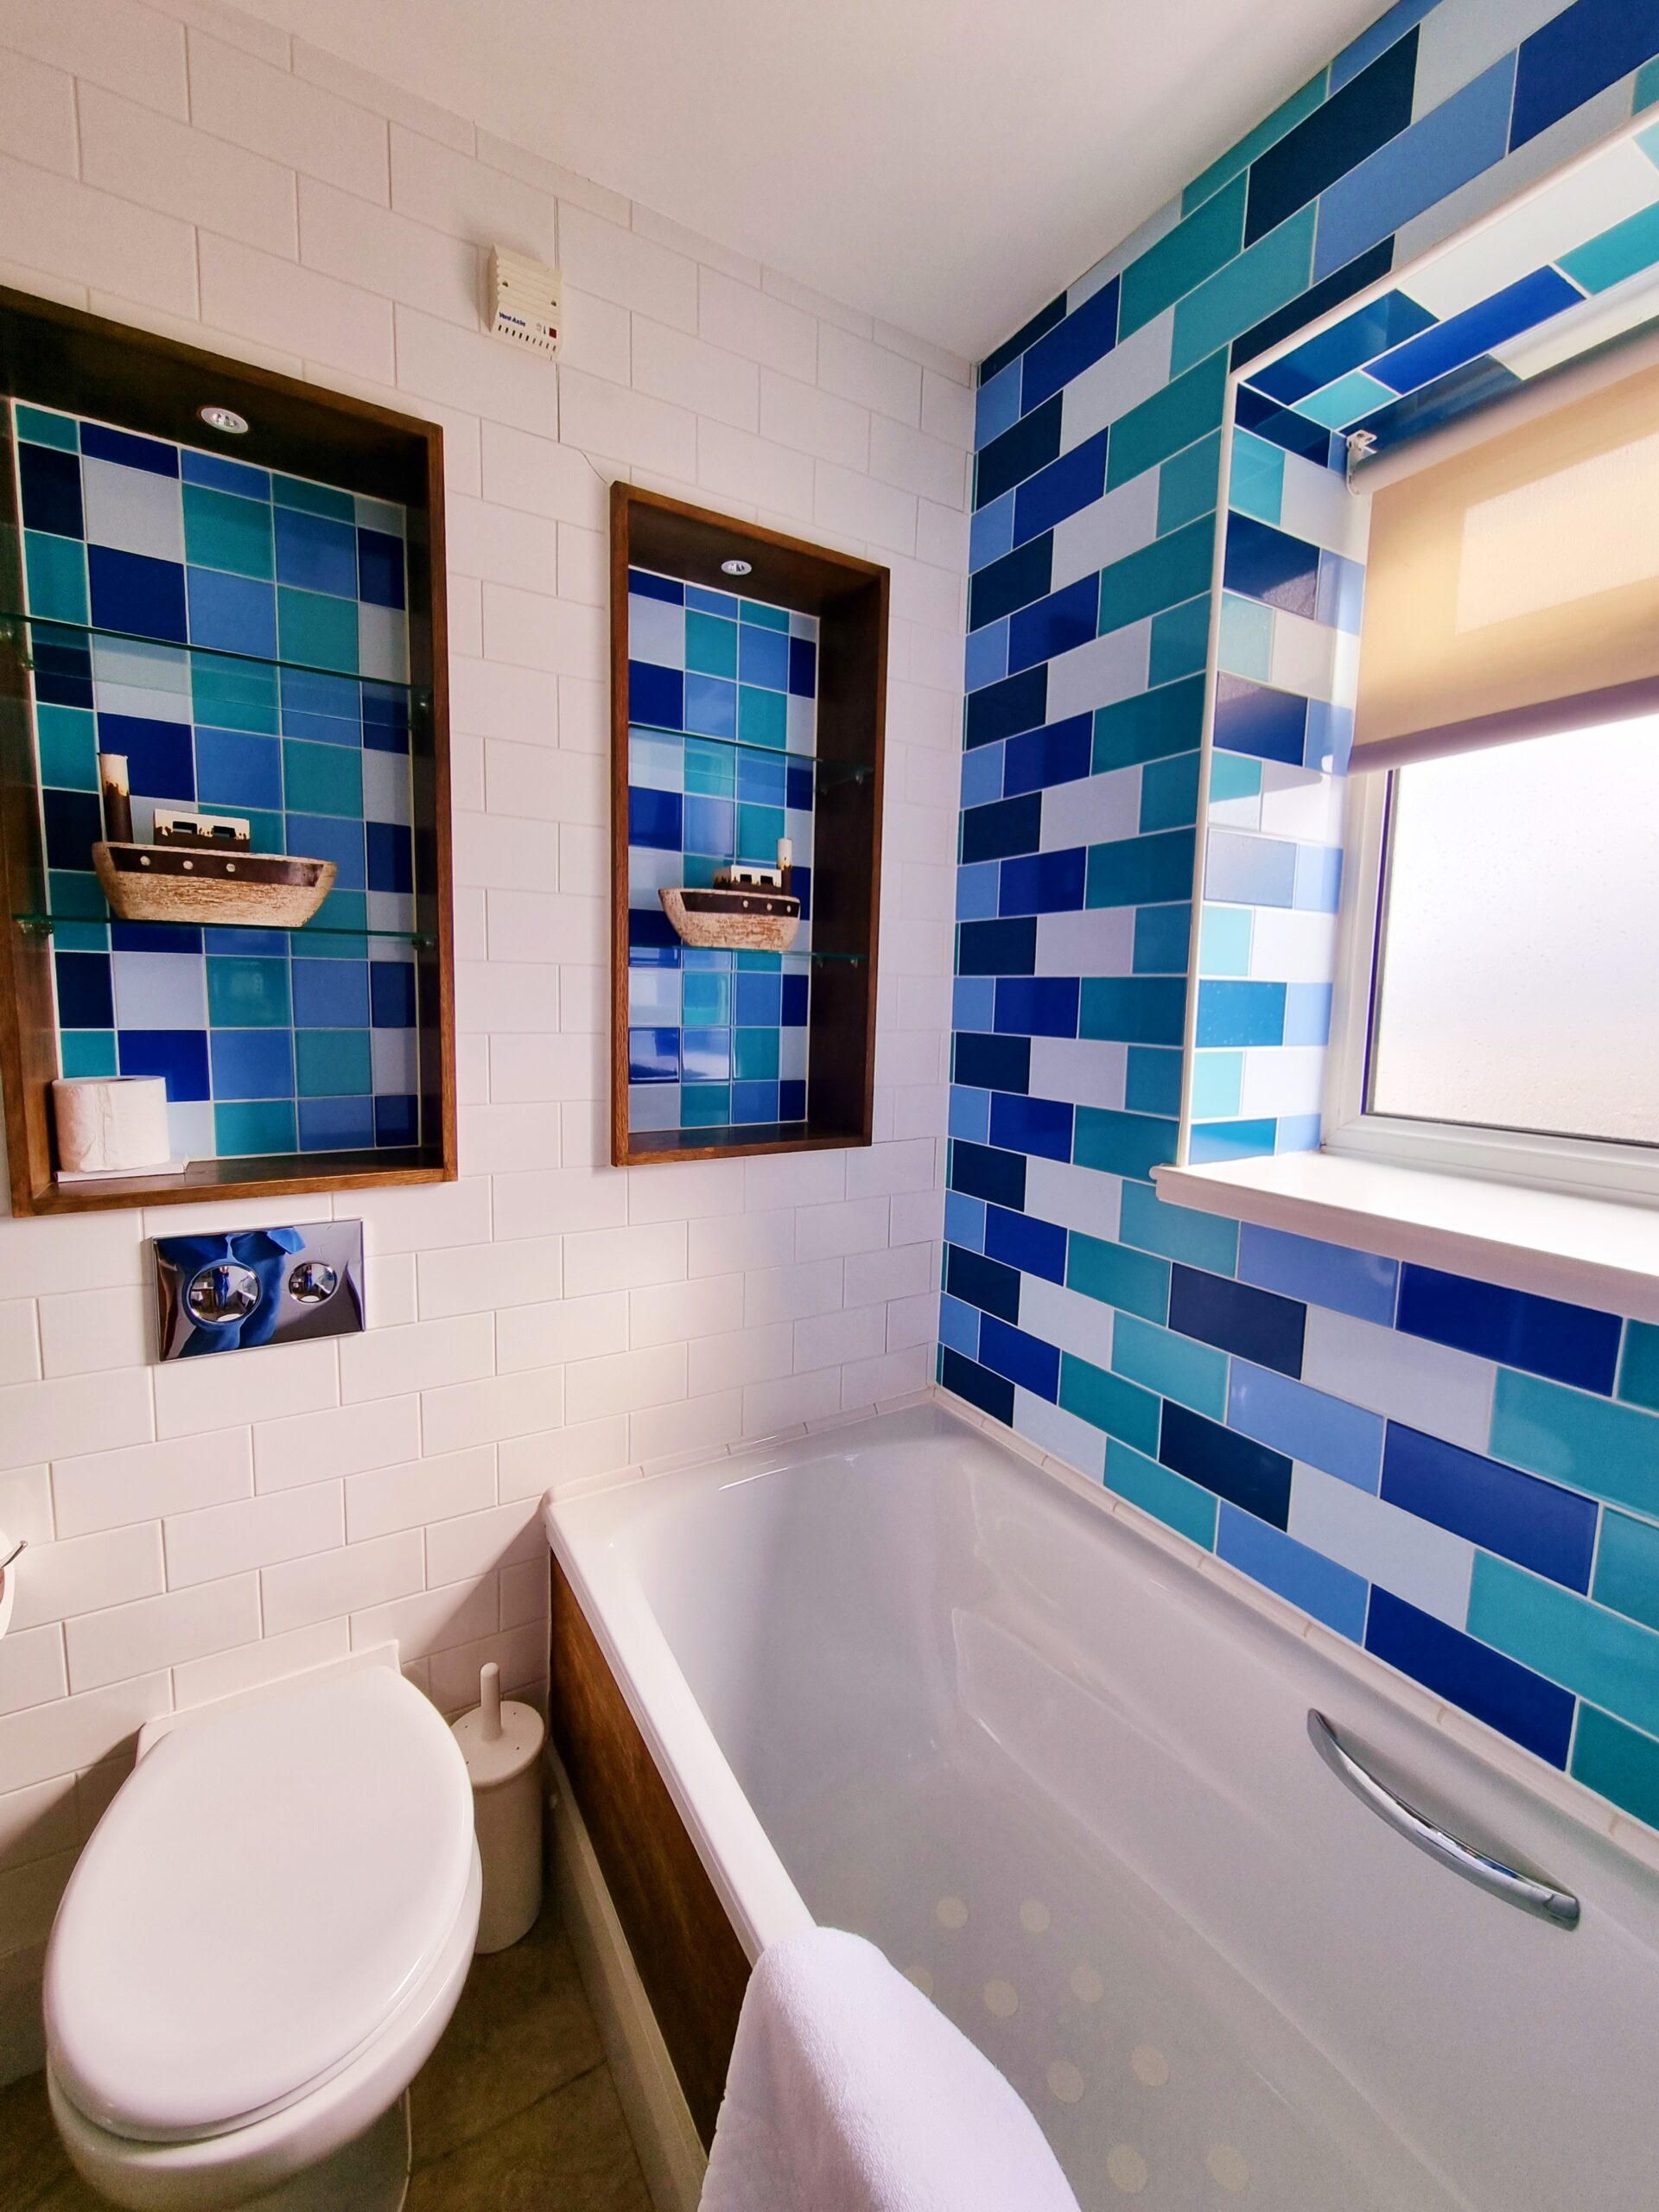 <img src="blue.jpg" alt="blue bathroom date ideas in aldeburgh"/>